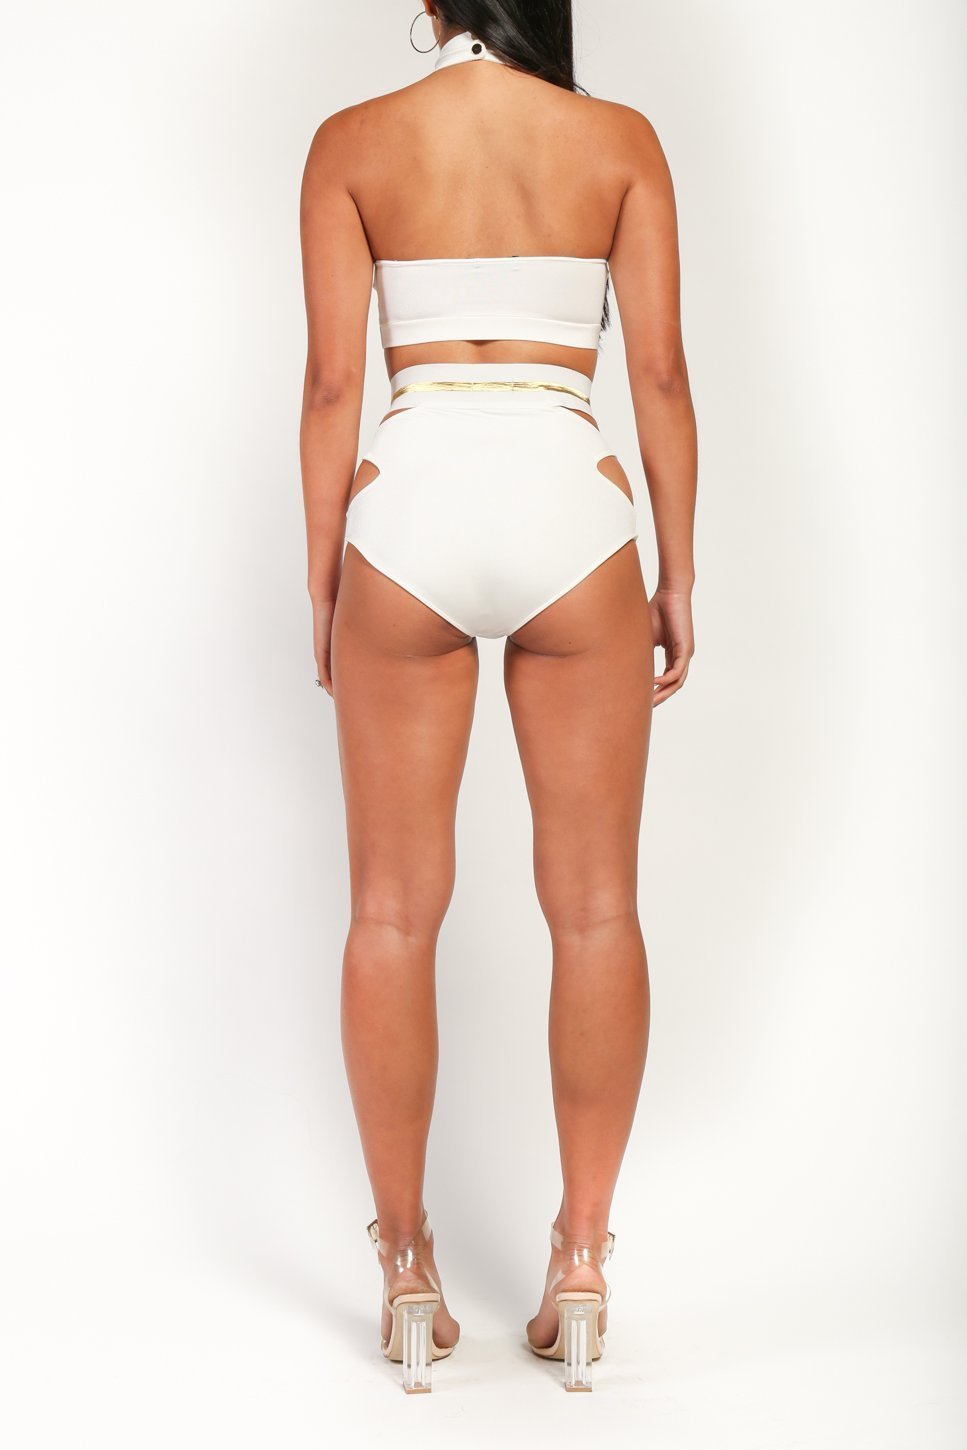 Strut White Bikini Set - SurgeStyle Boutique